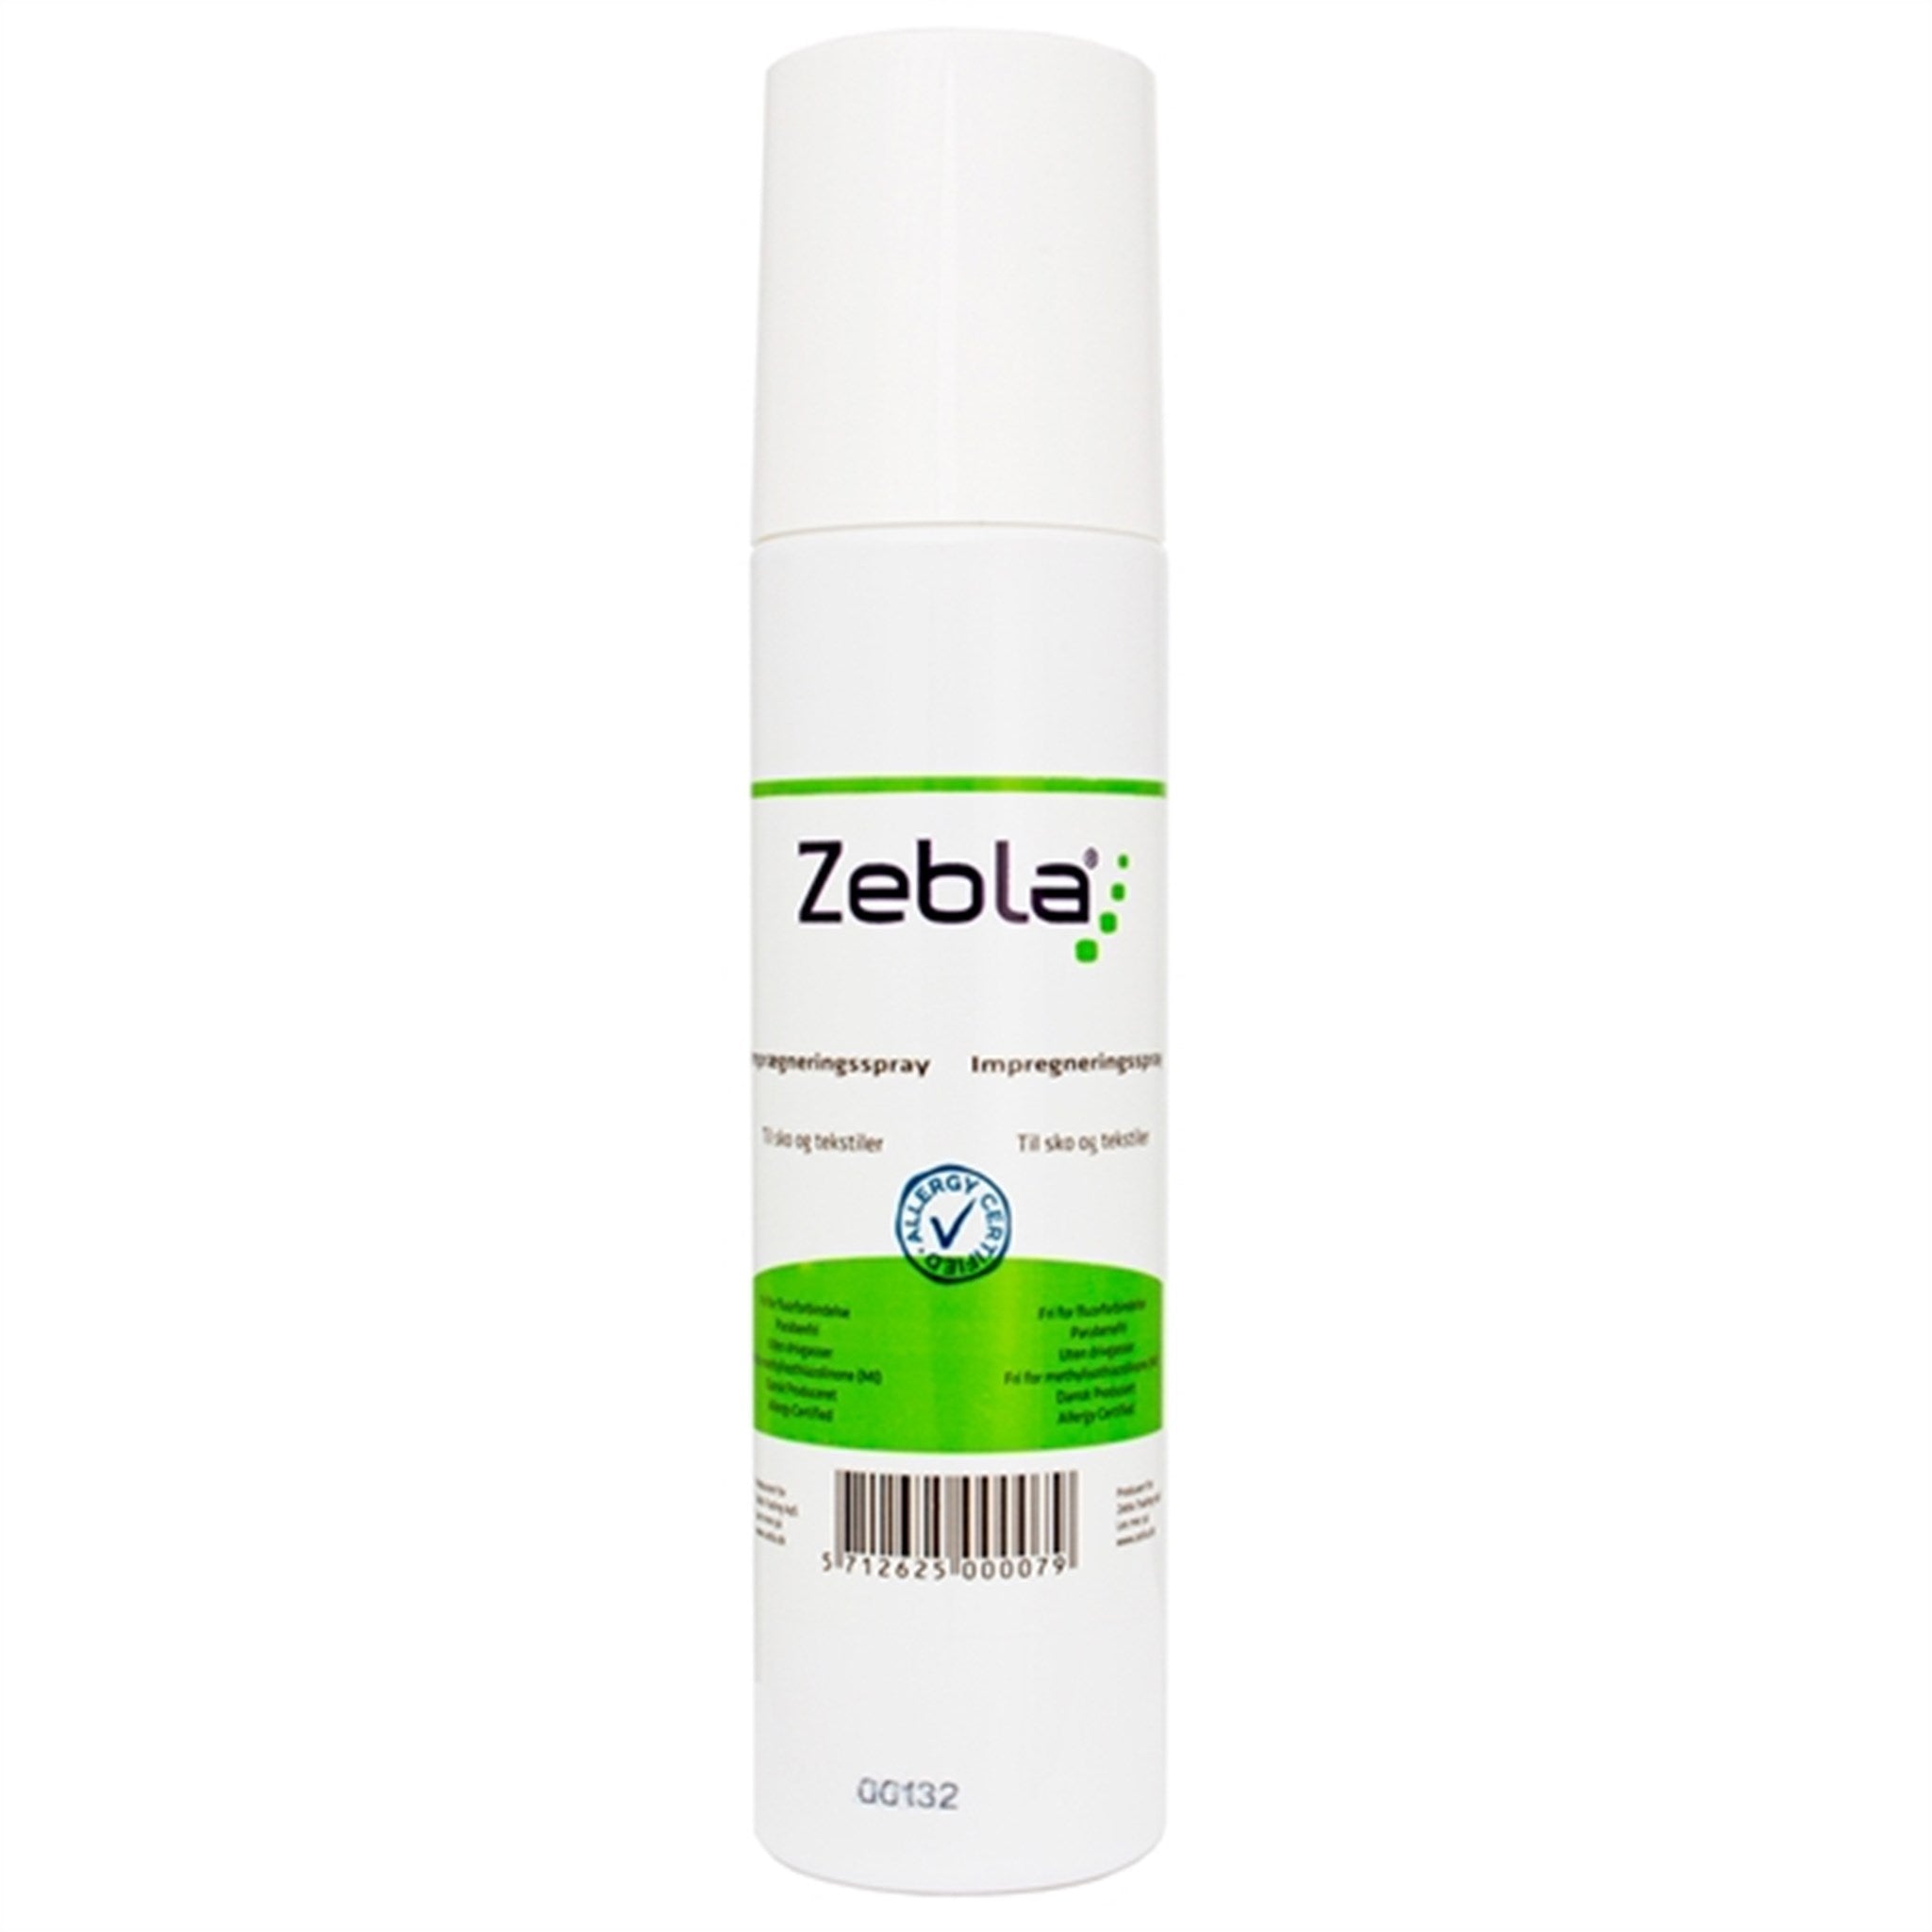 Zebla Impregnation Spray 300 ml